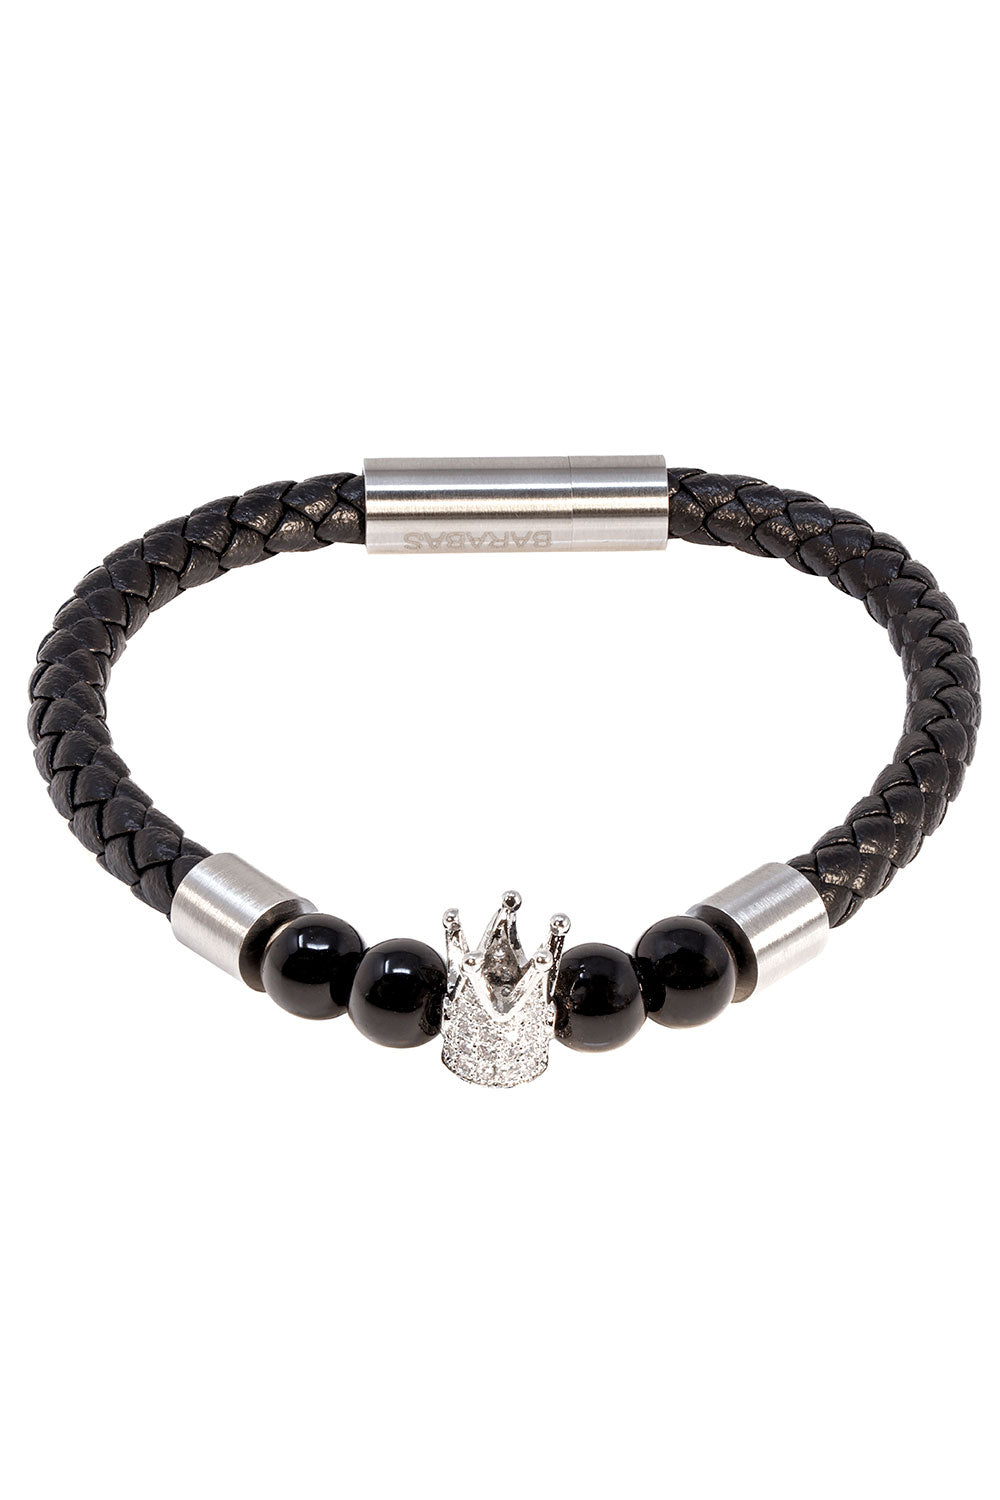 Barabas Unisex Obsidian Crown Leather Magnetic Bangle Bracelets 4BB13 Silver